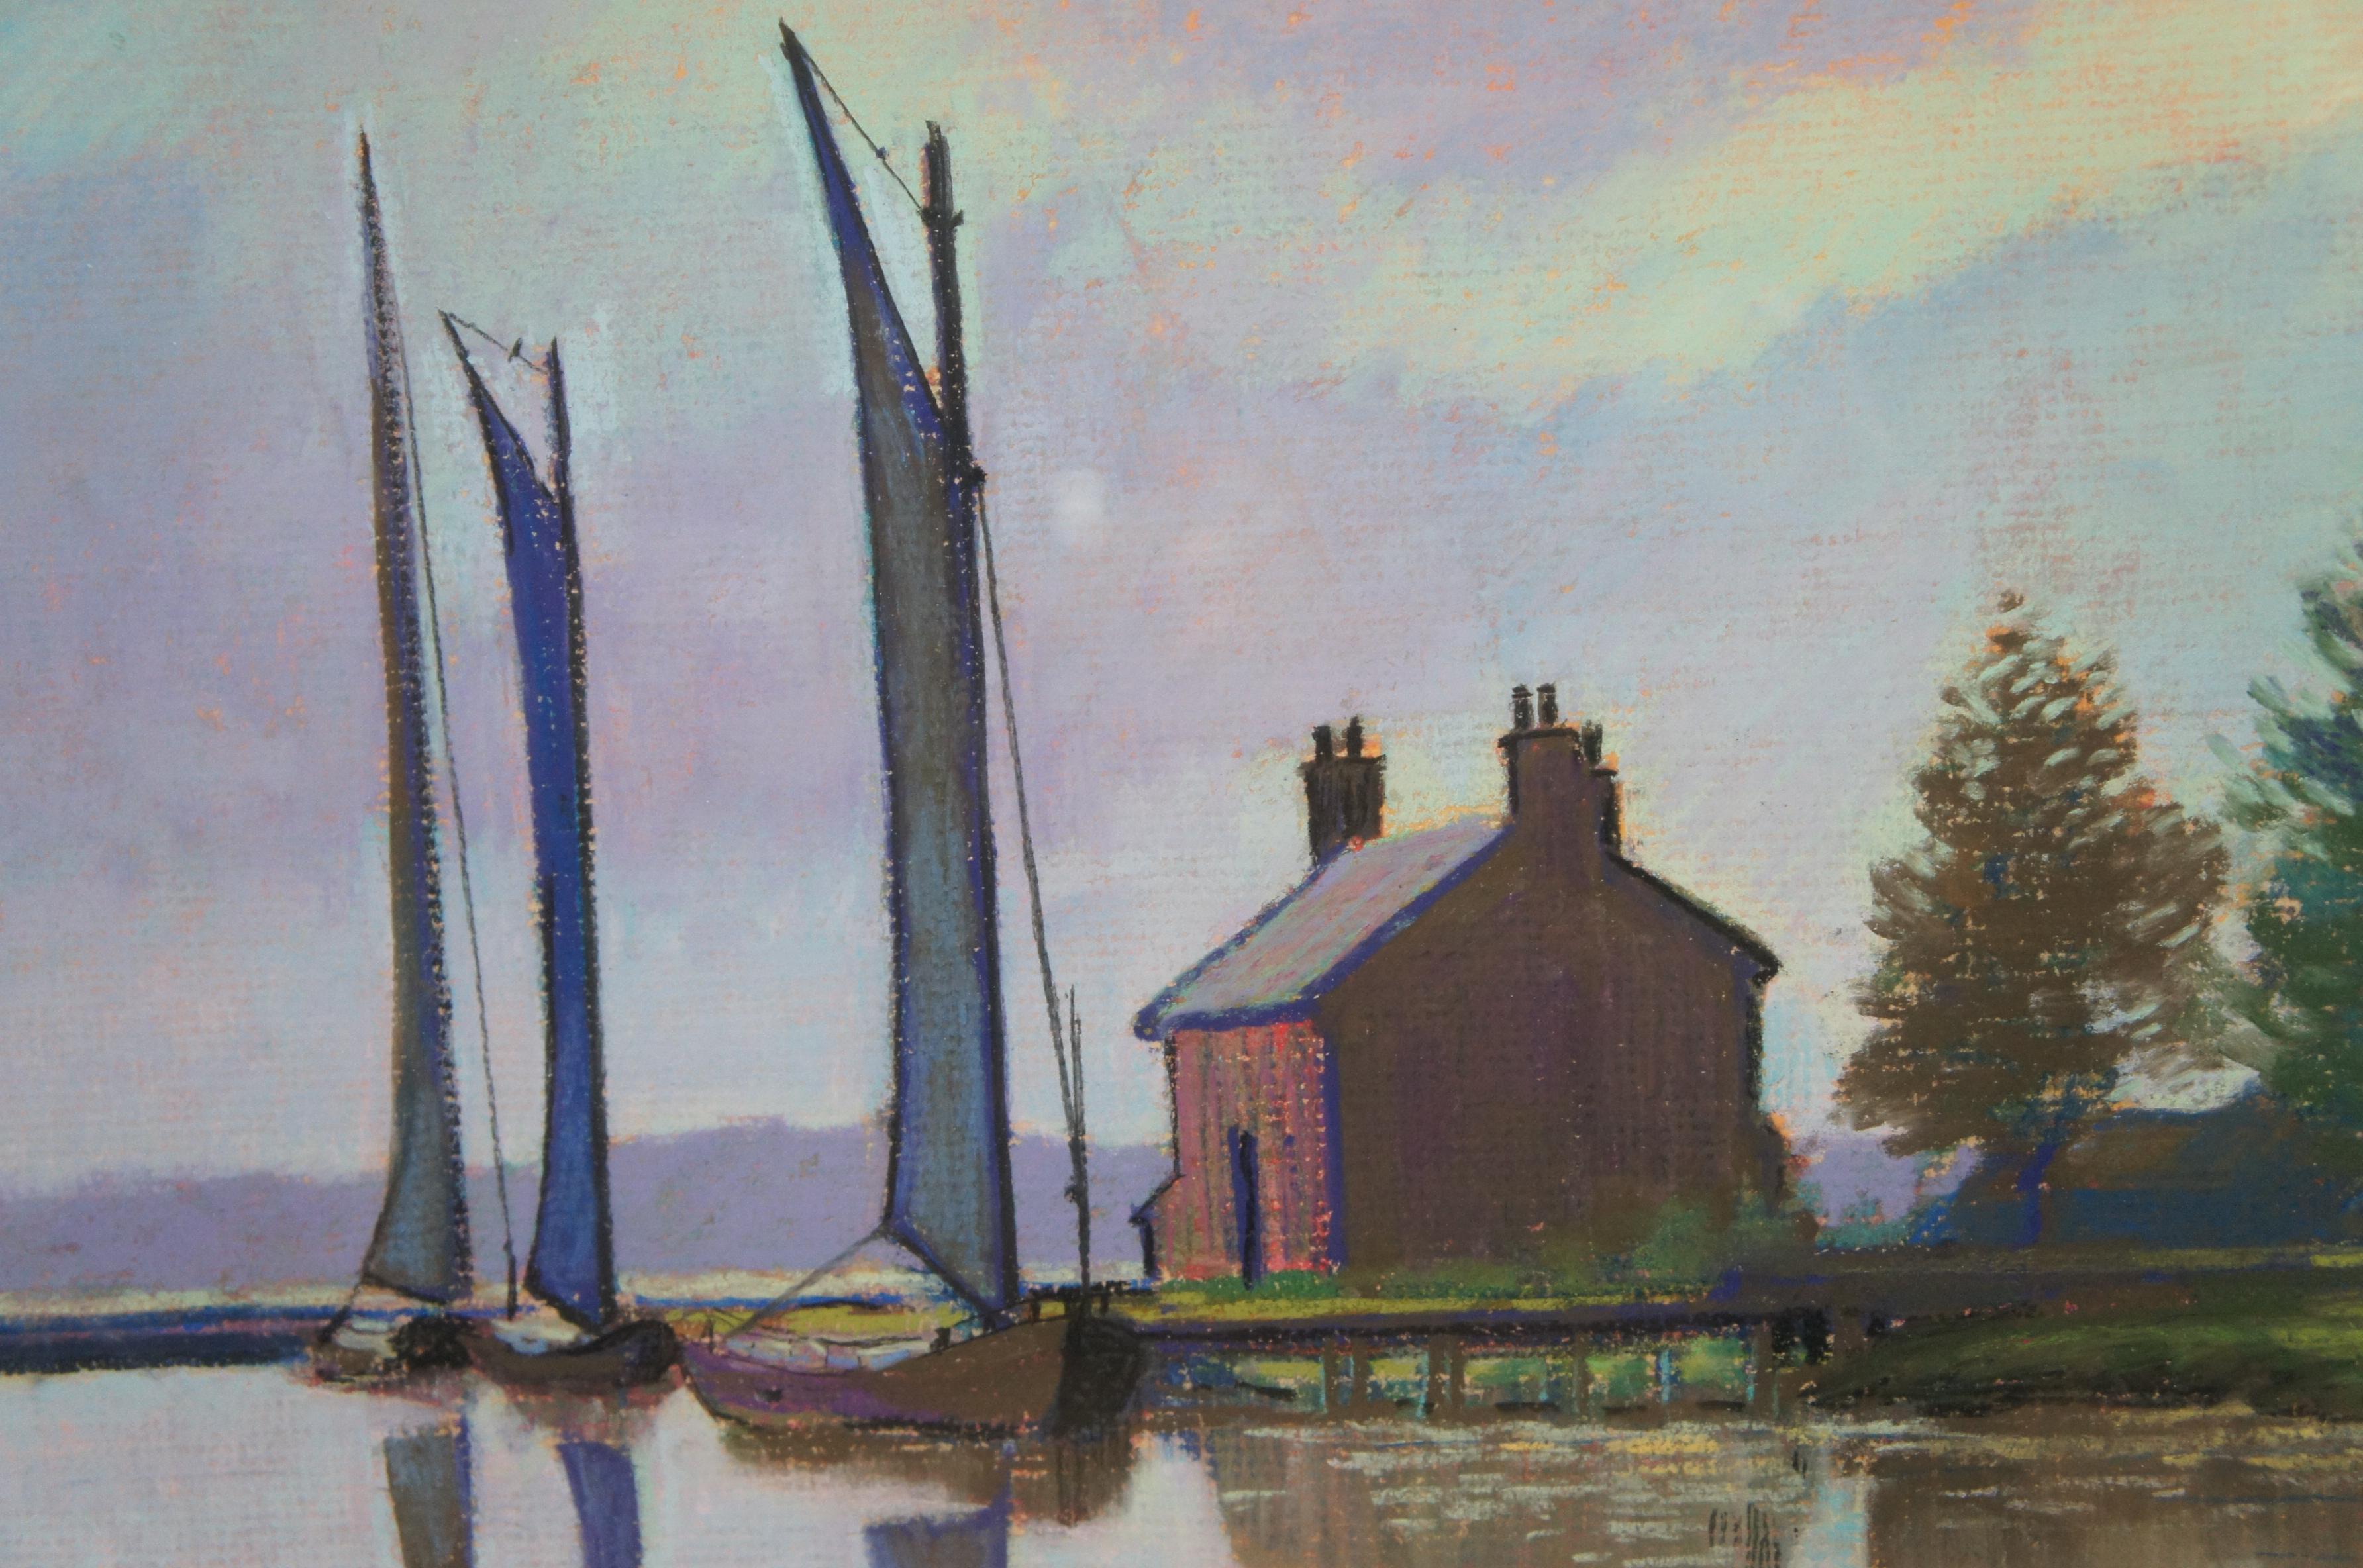 1995 Vintage Watercolor Realist Landscape Painting Sailboats Farm by Fleming For Sale 3